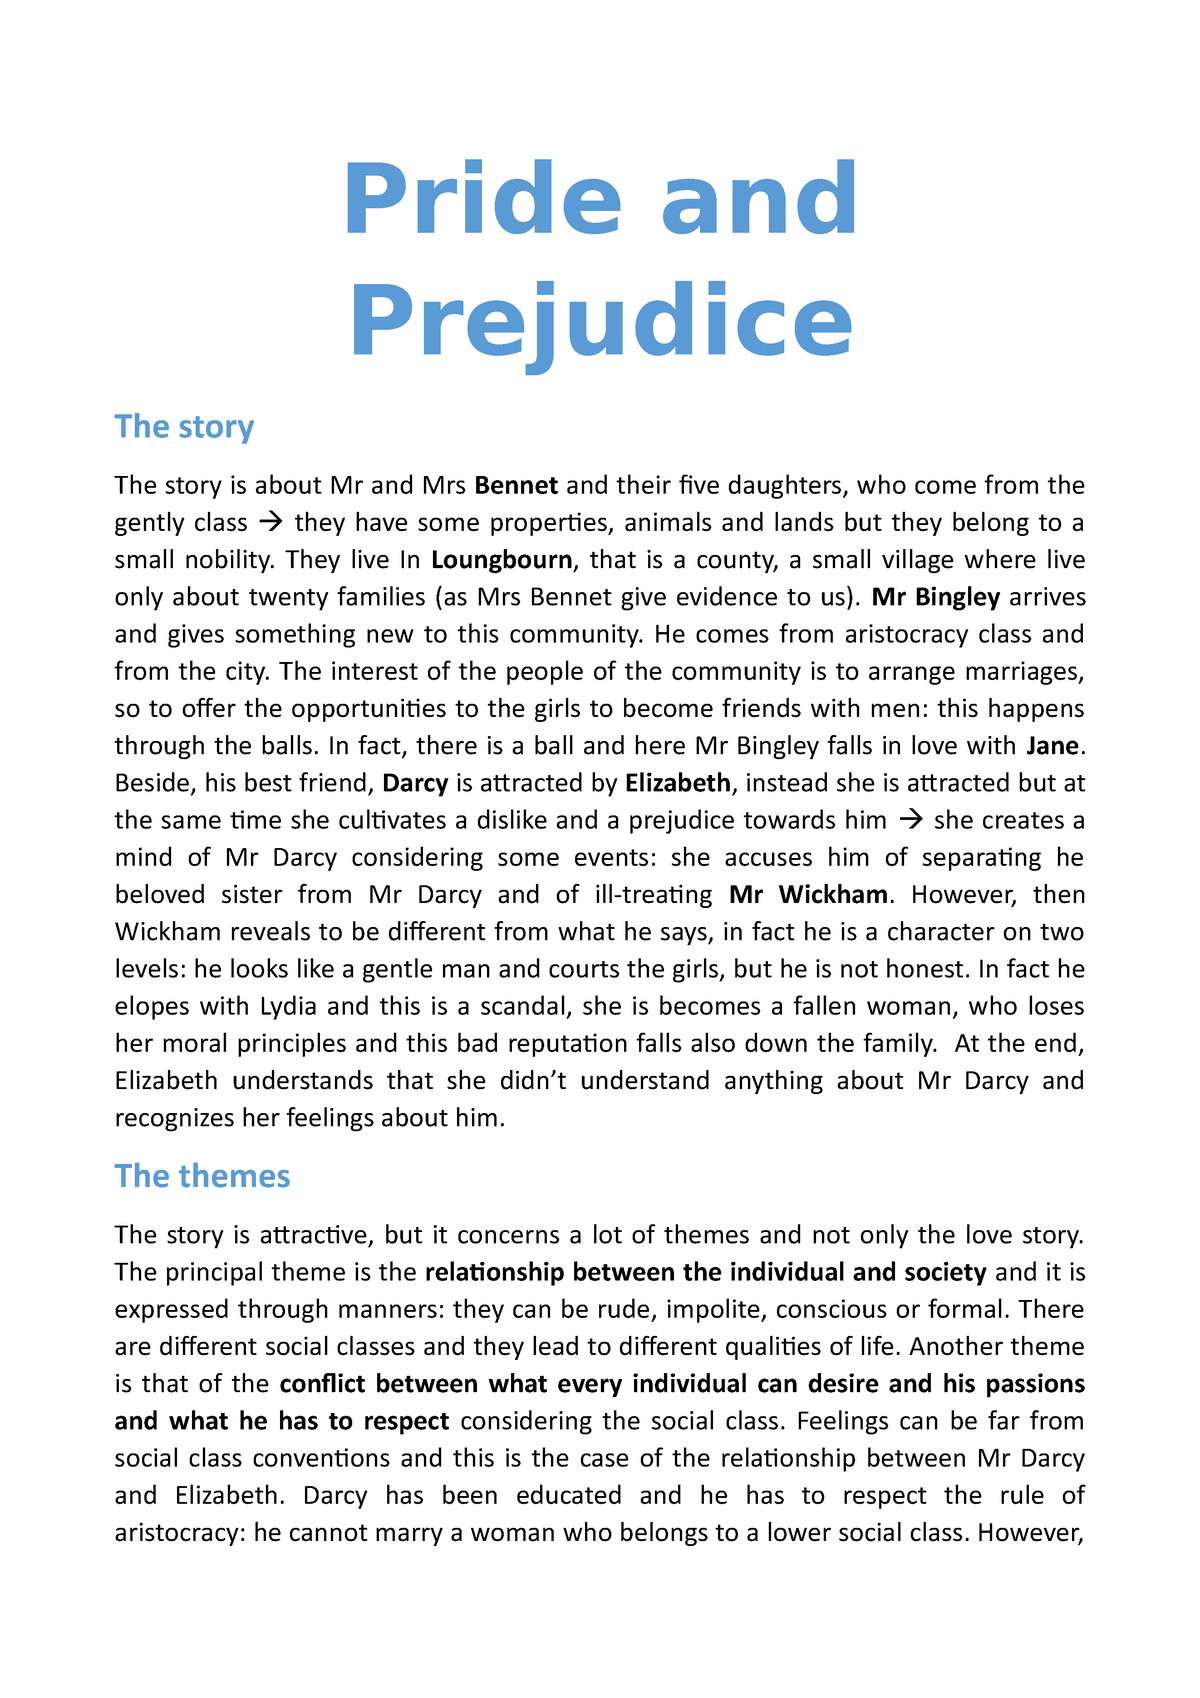 introduction essay pride and prejudice